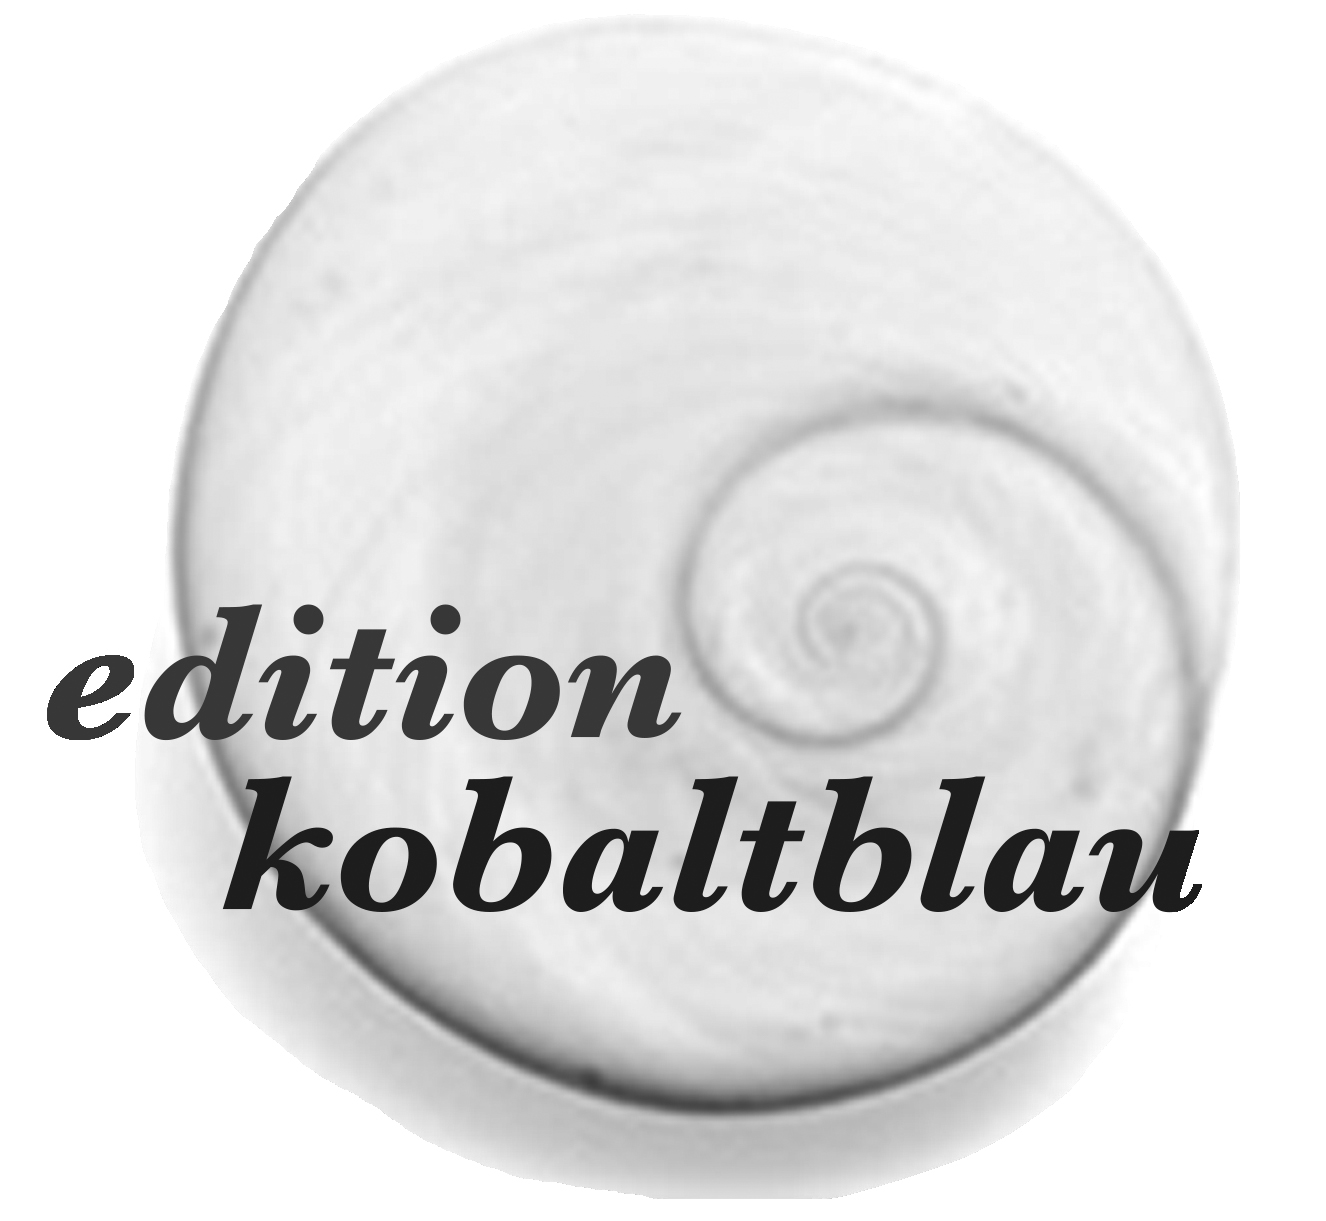 edition kobaltblau